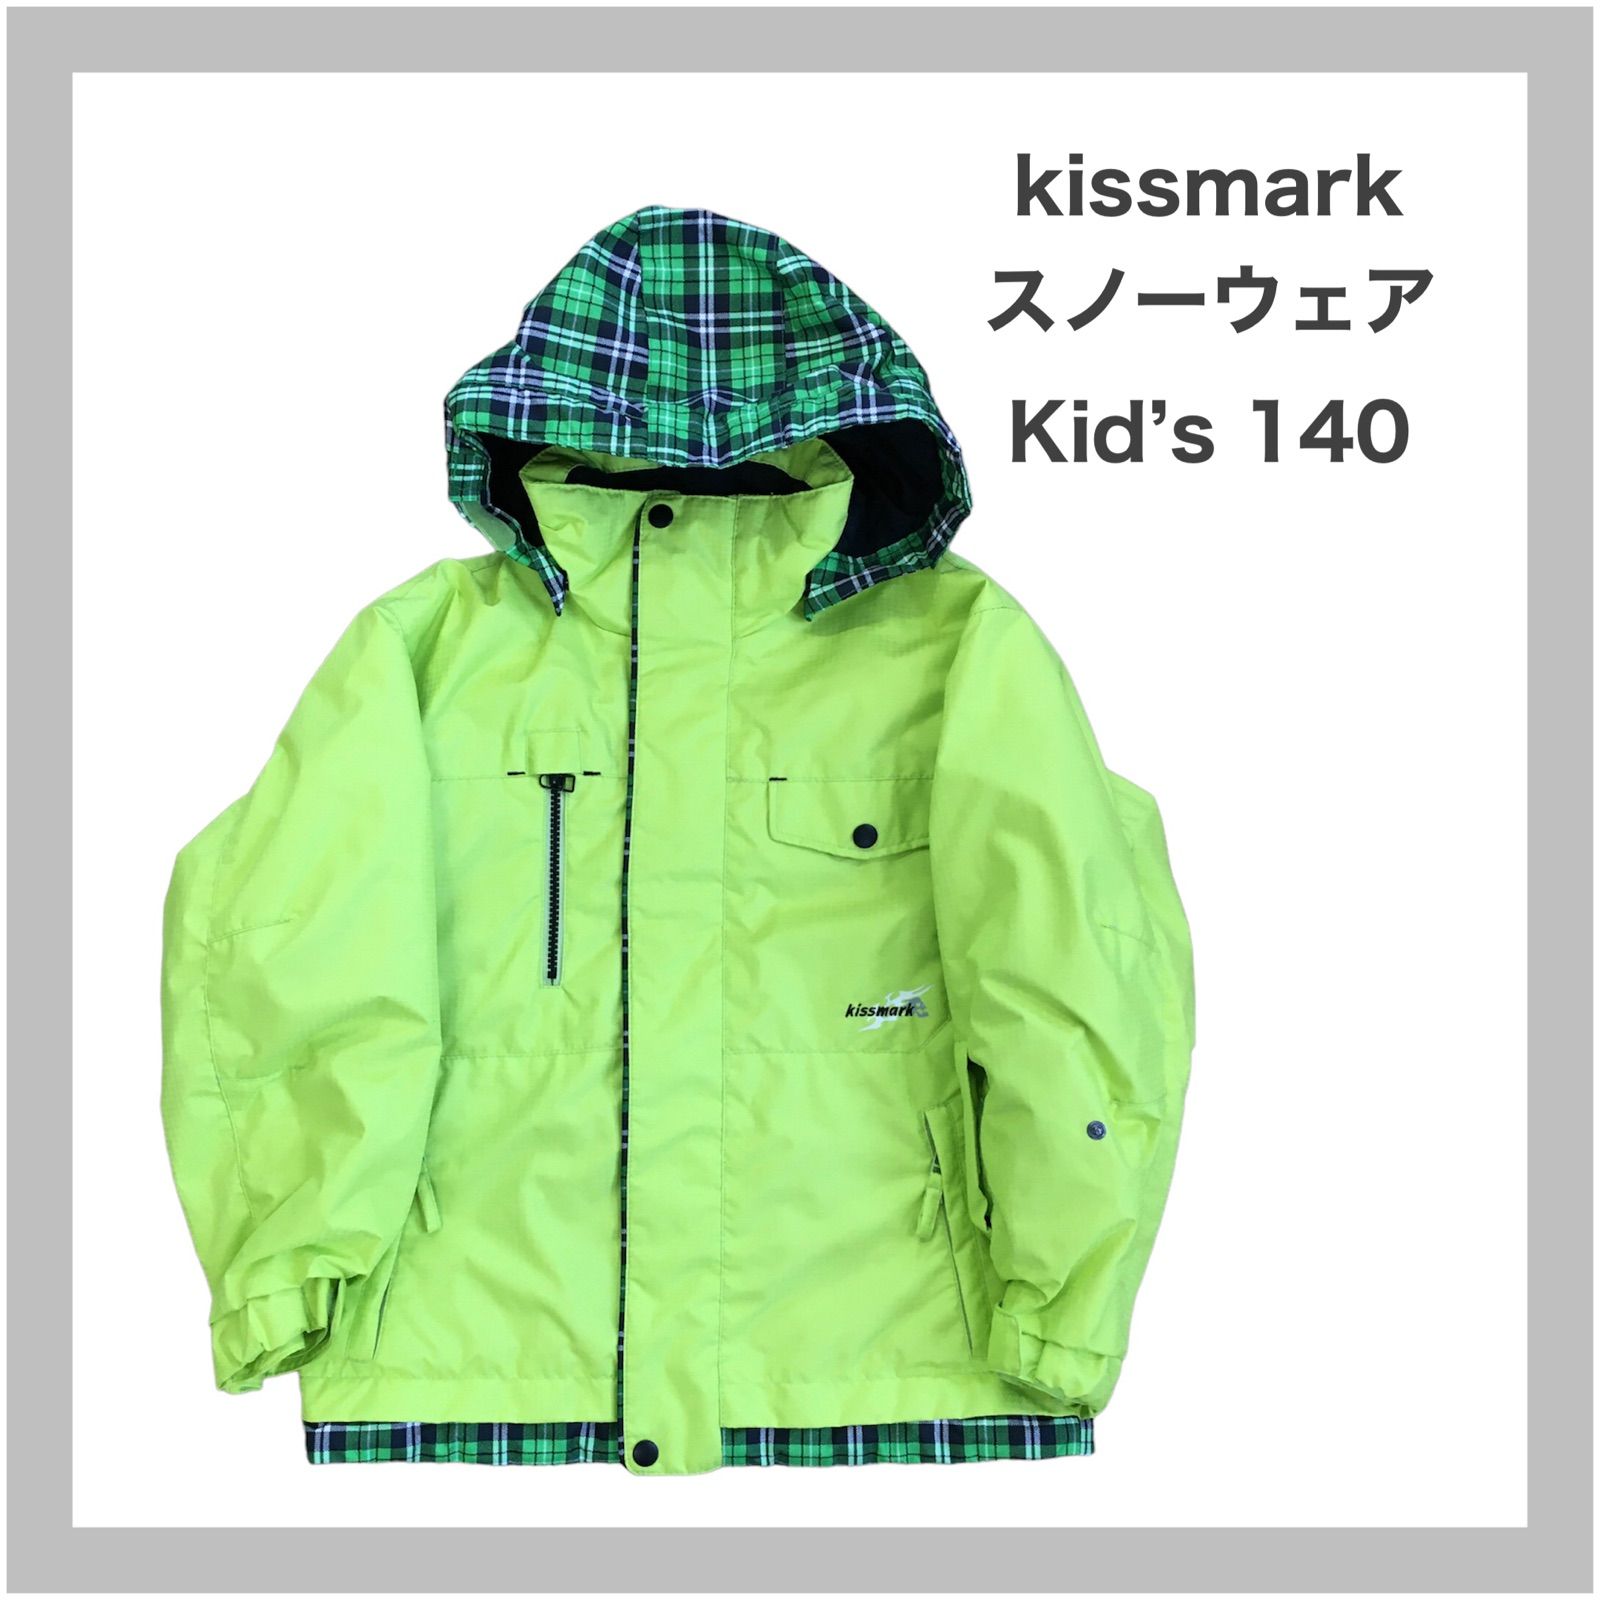 kissmark スノーボード スキー ウェア 140